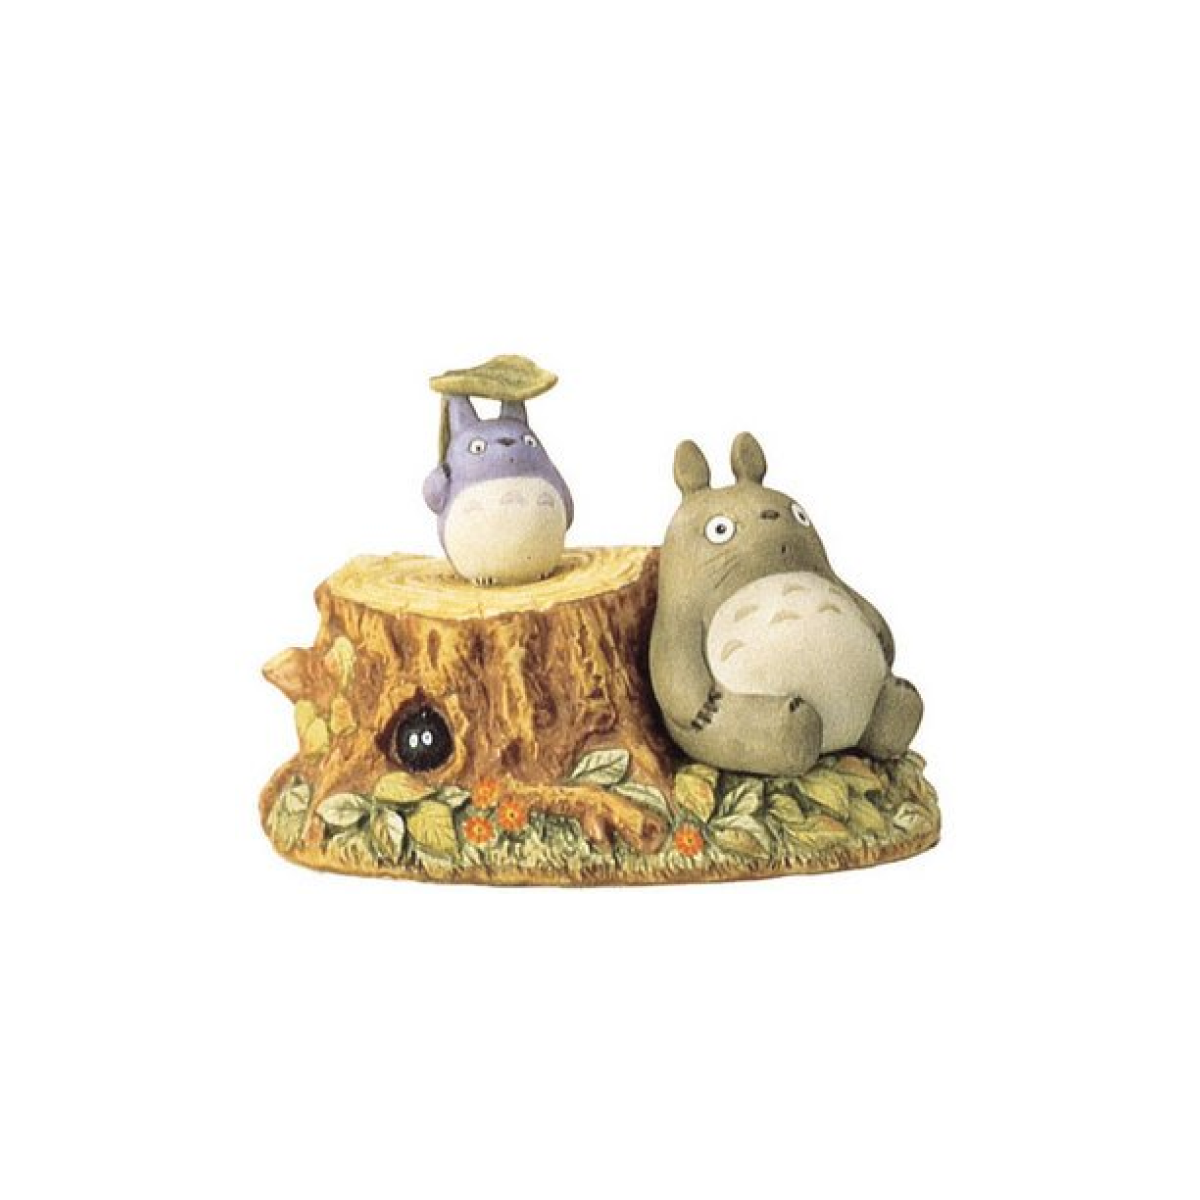 Music Box - Totoro (2 On Log) "My Neighbor Totoro" (Japan Limited Edition)